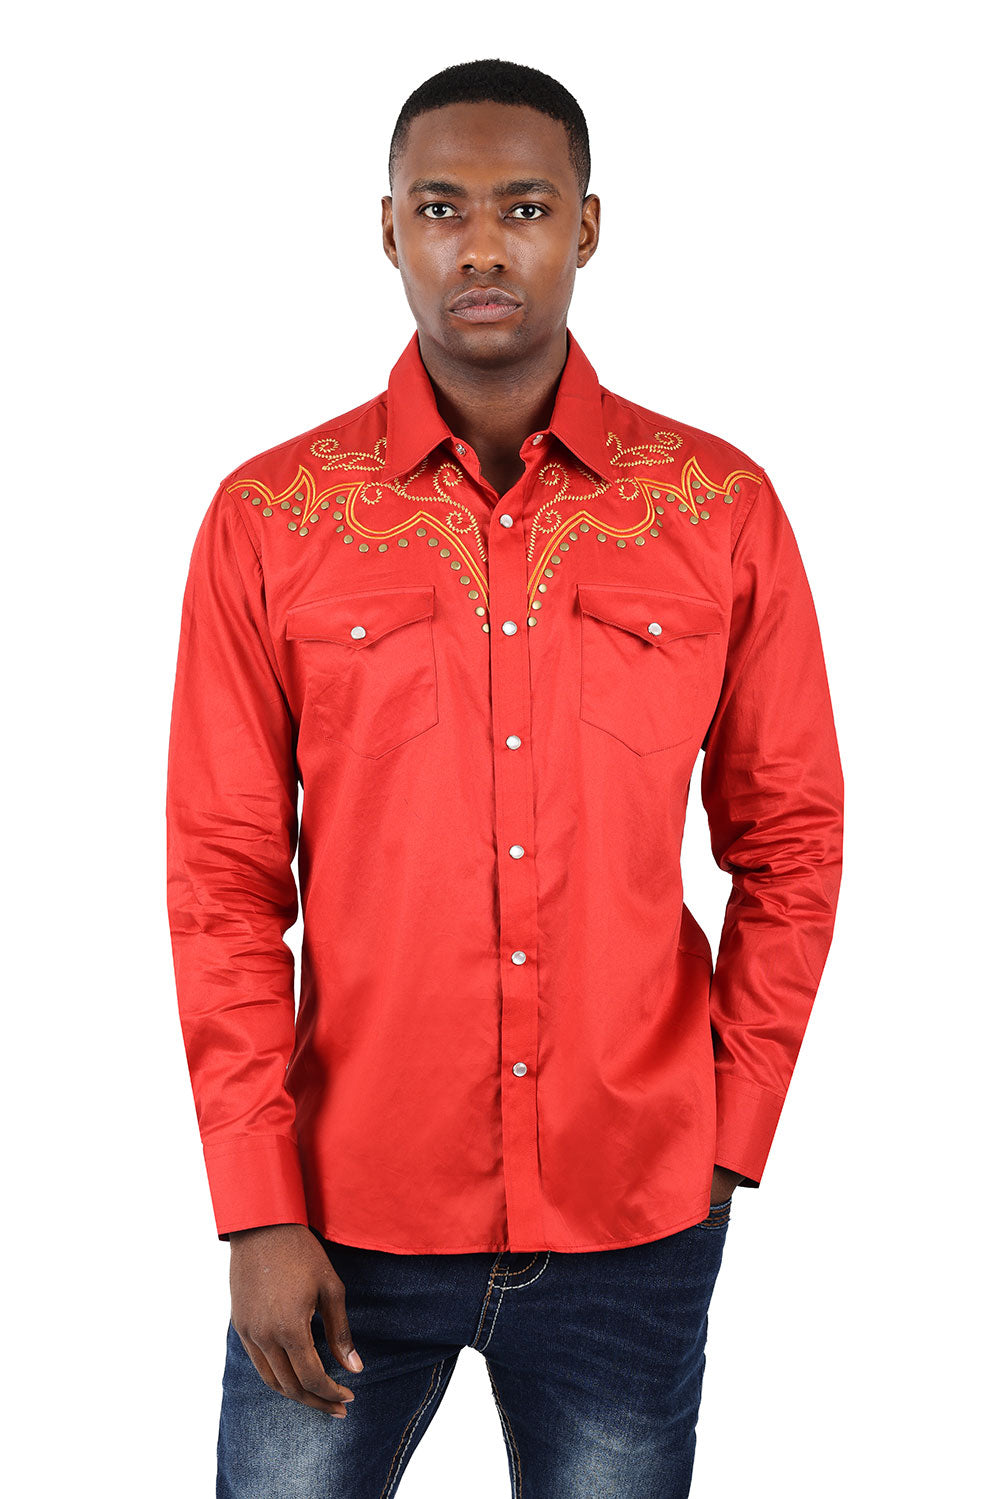 BARABAS Men's Floral Horseshoe Studded Long Sleeve Shirts 3WS2 Rust